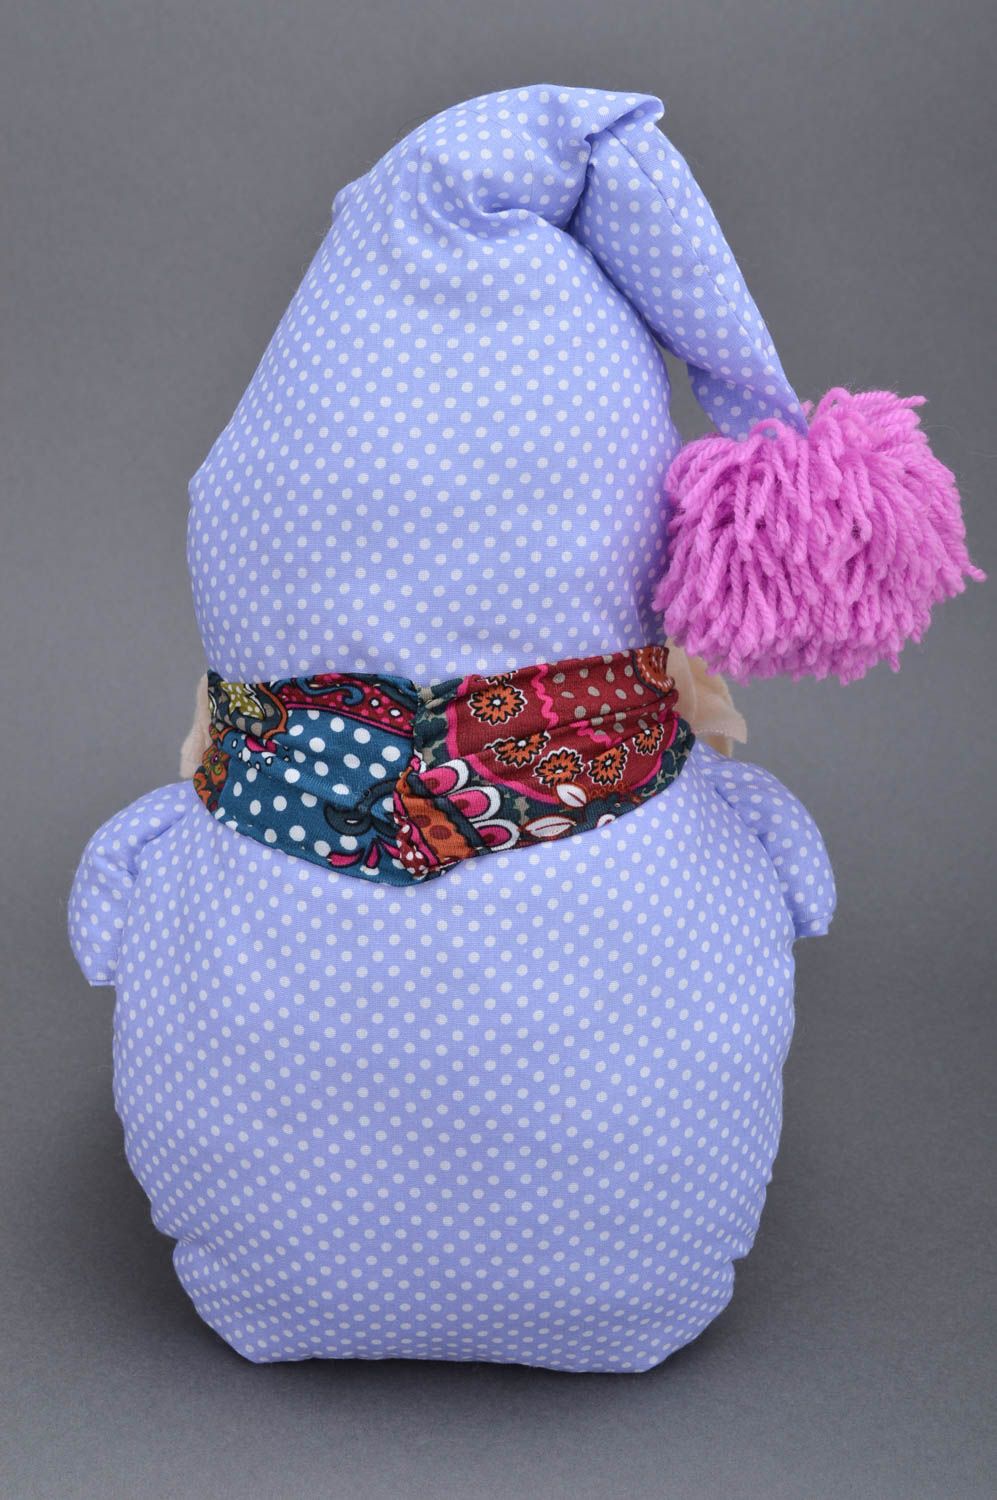 Handmade toy stuffed toy designer interior doll present for children home decor photo 3